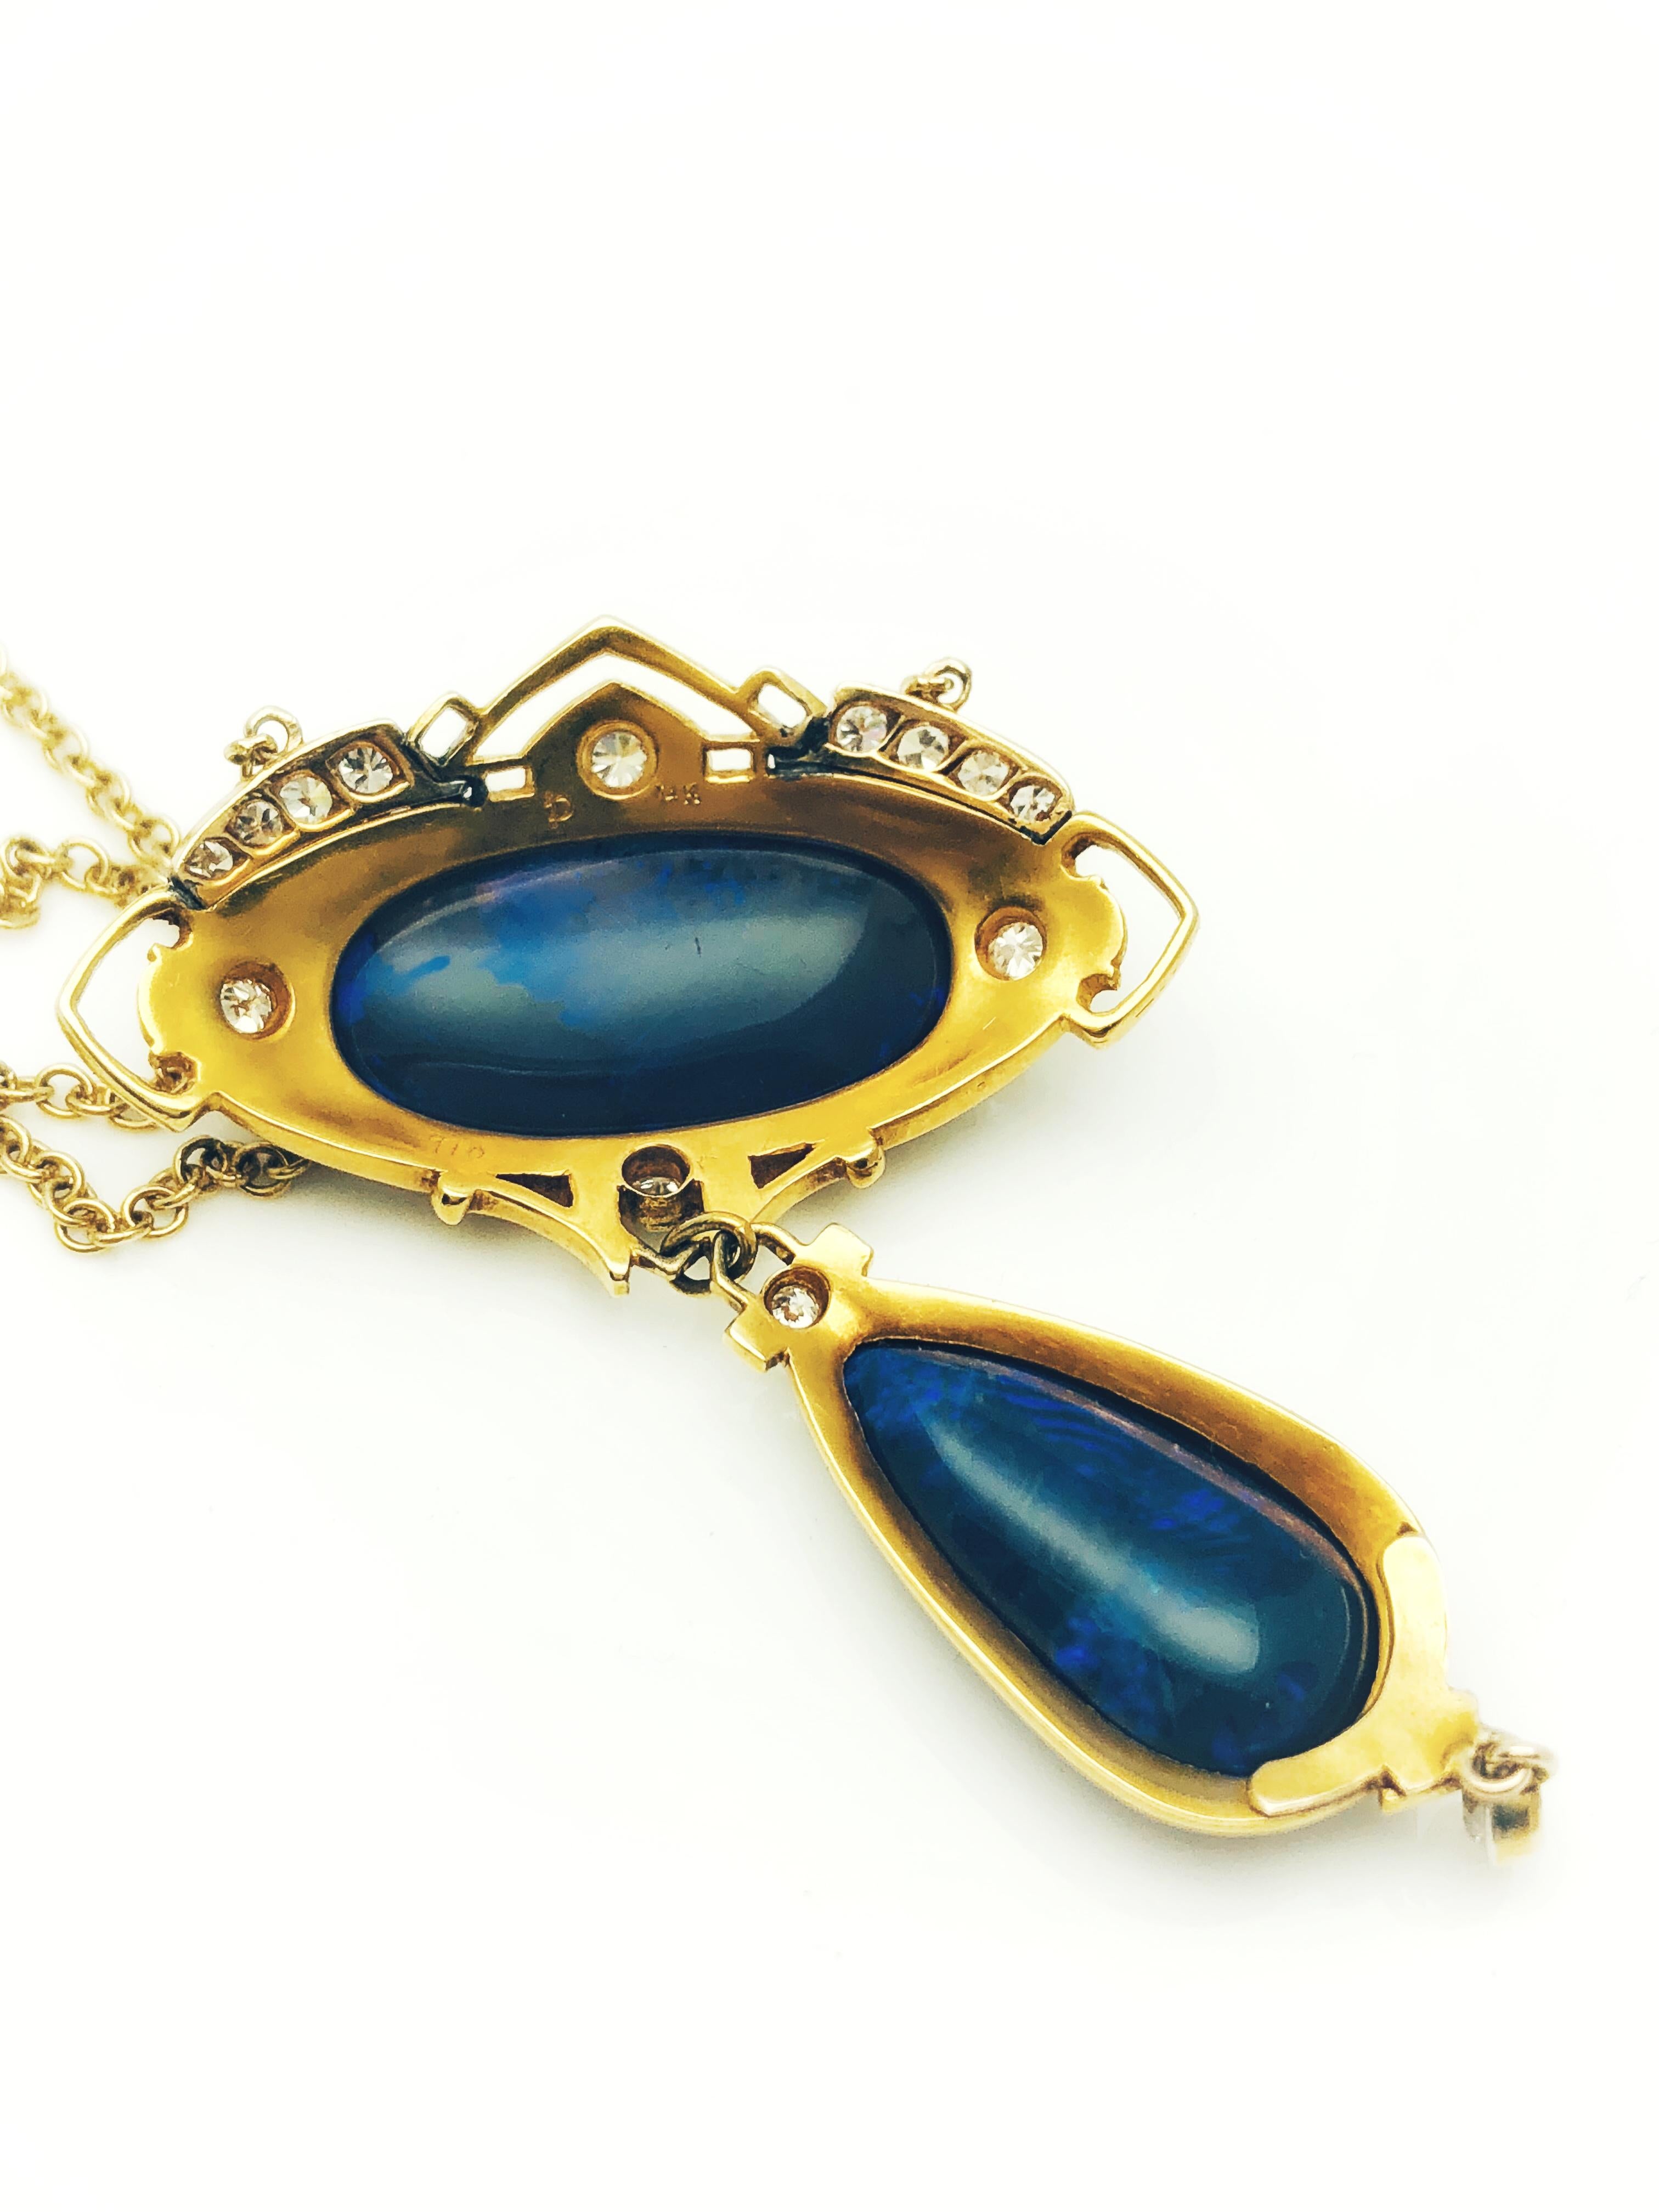 Durand & Company Rare Art Nouveau Gold, Black Opal and Diamond Necklace 1